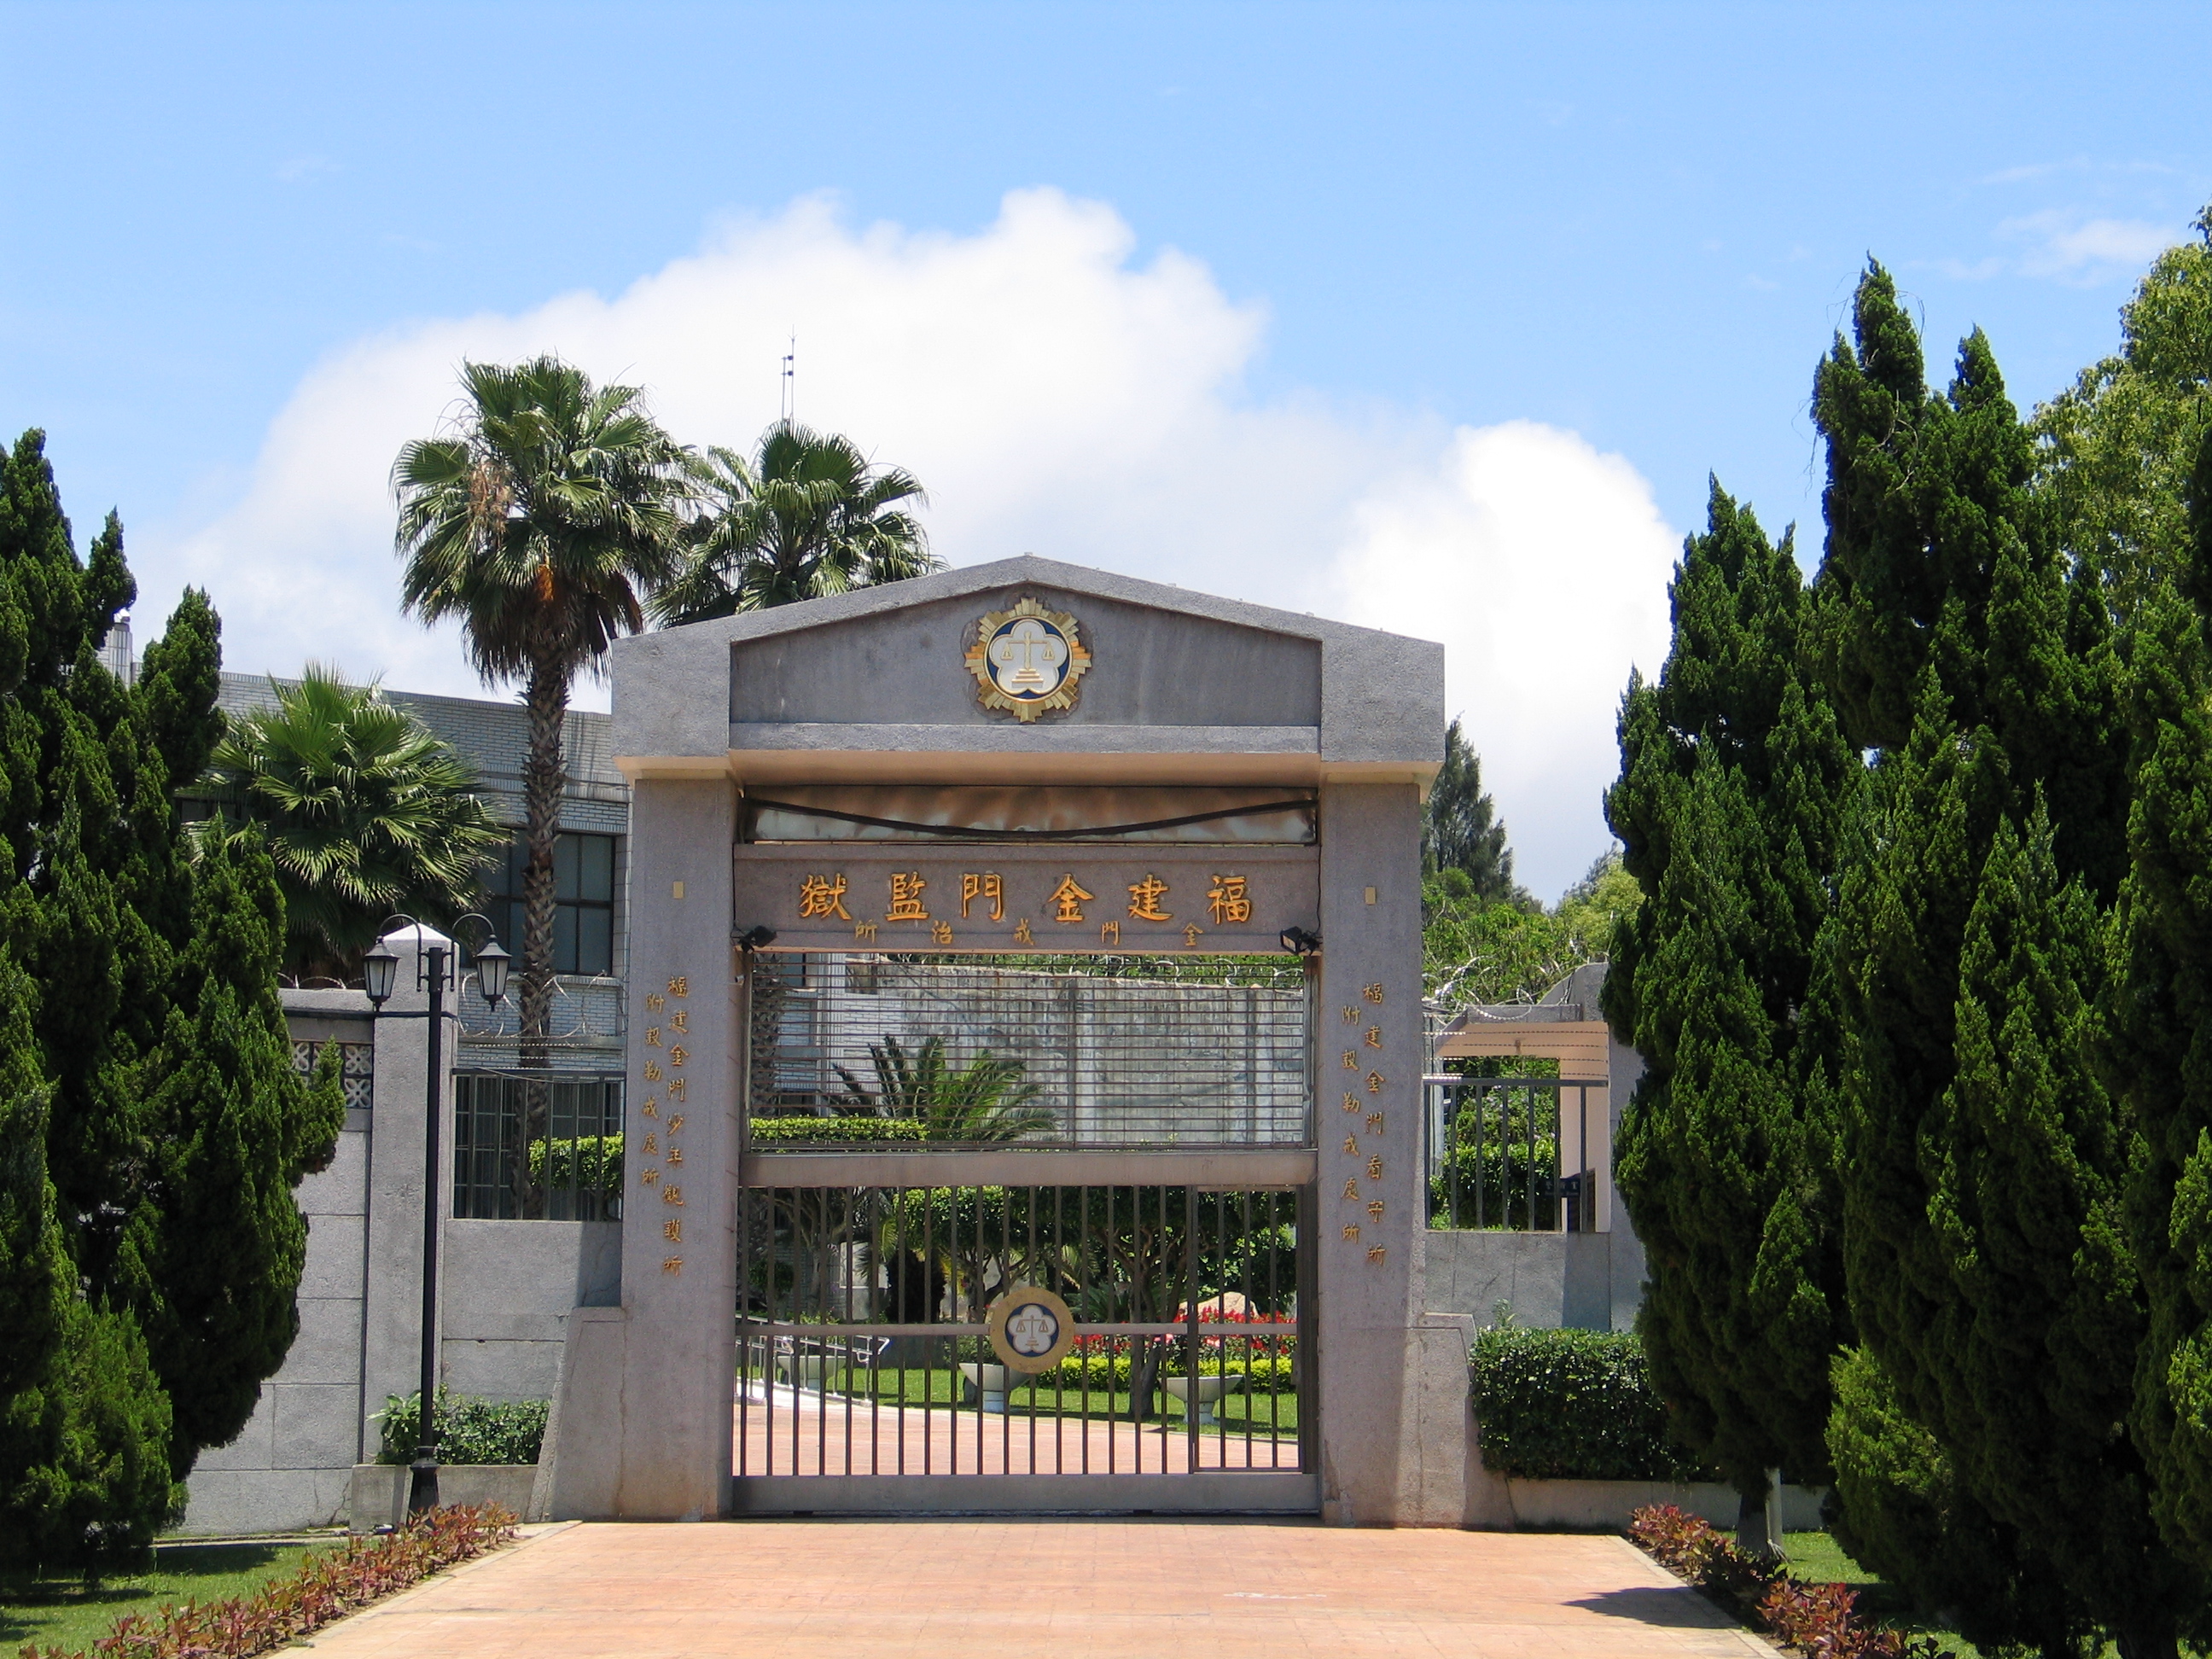 Picture of the Main Gate of the Kinmen Prison in 2001